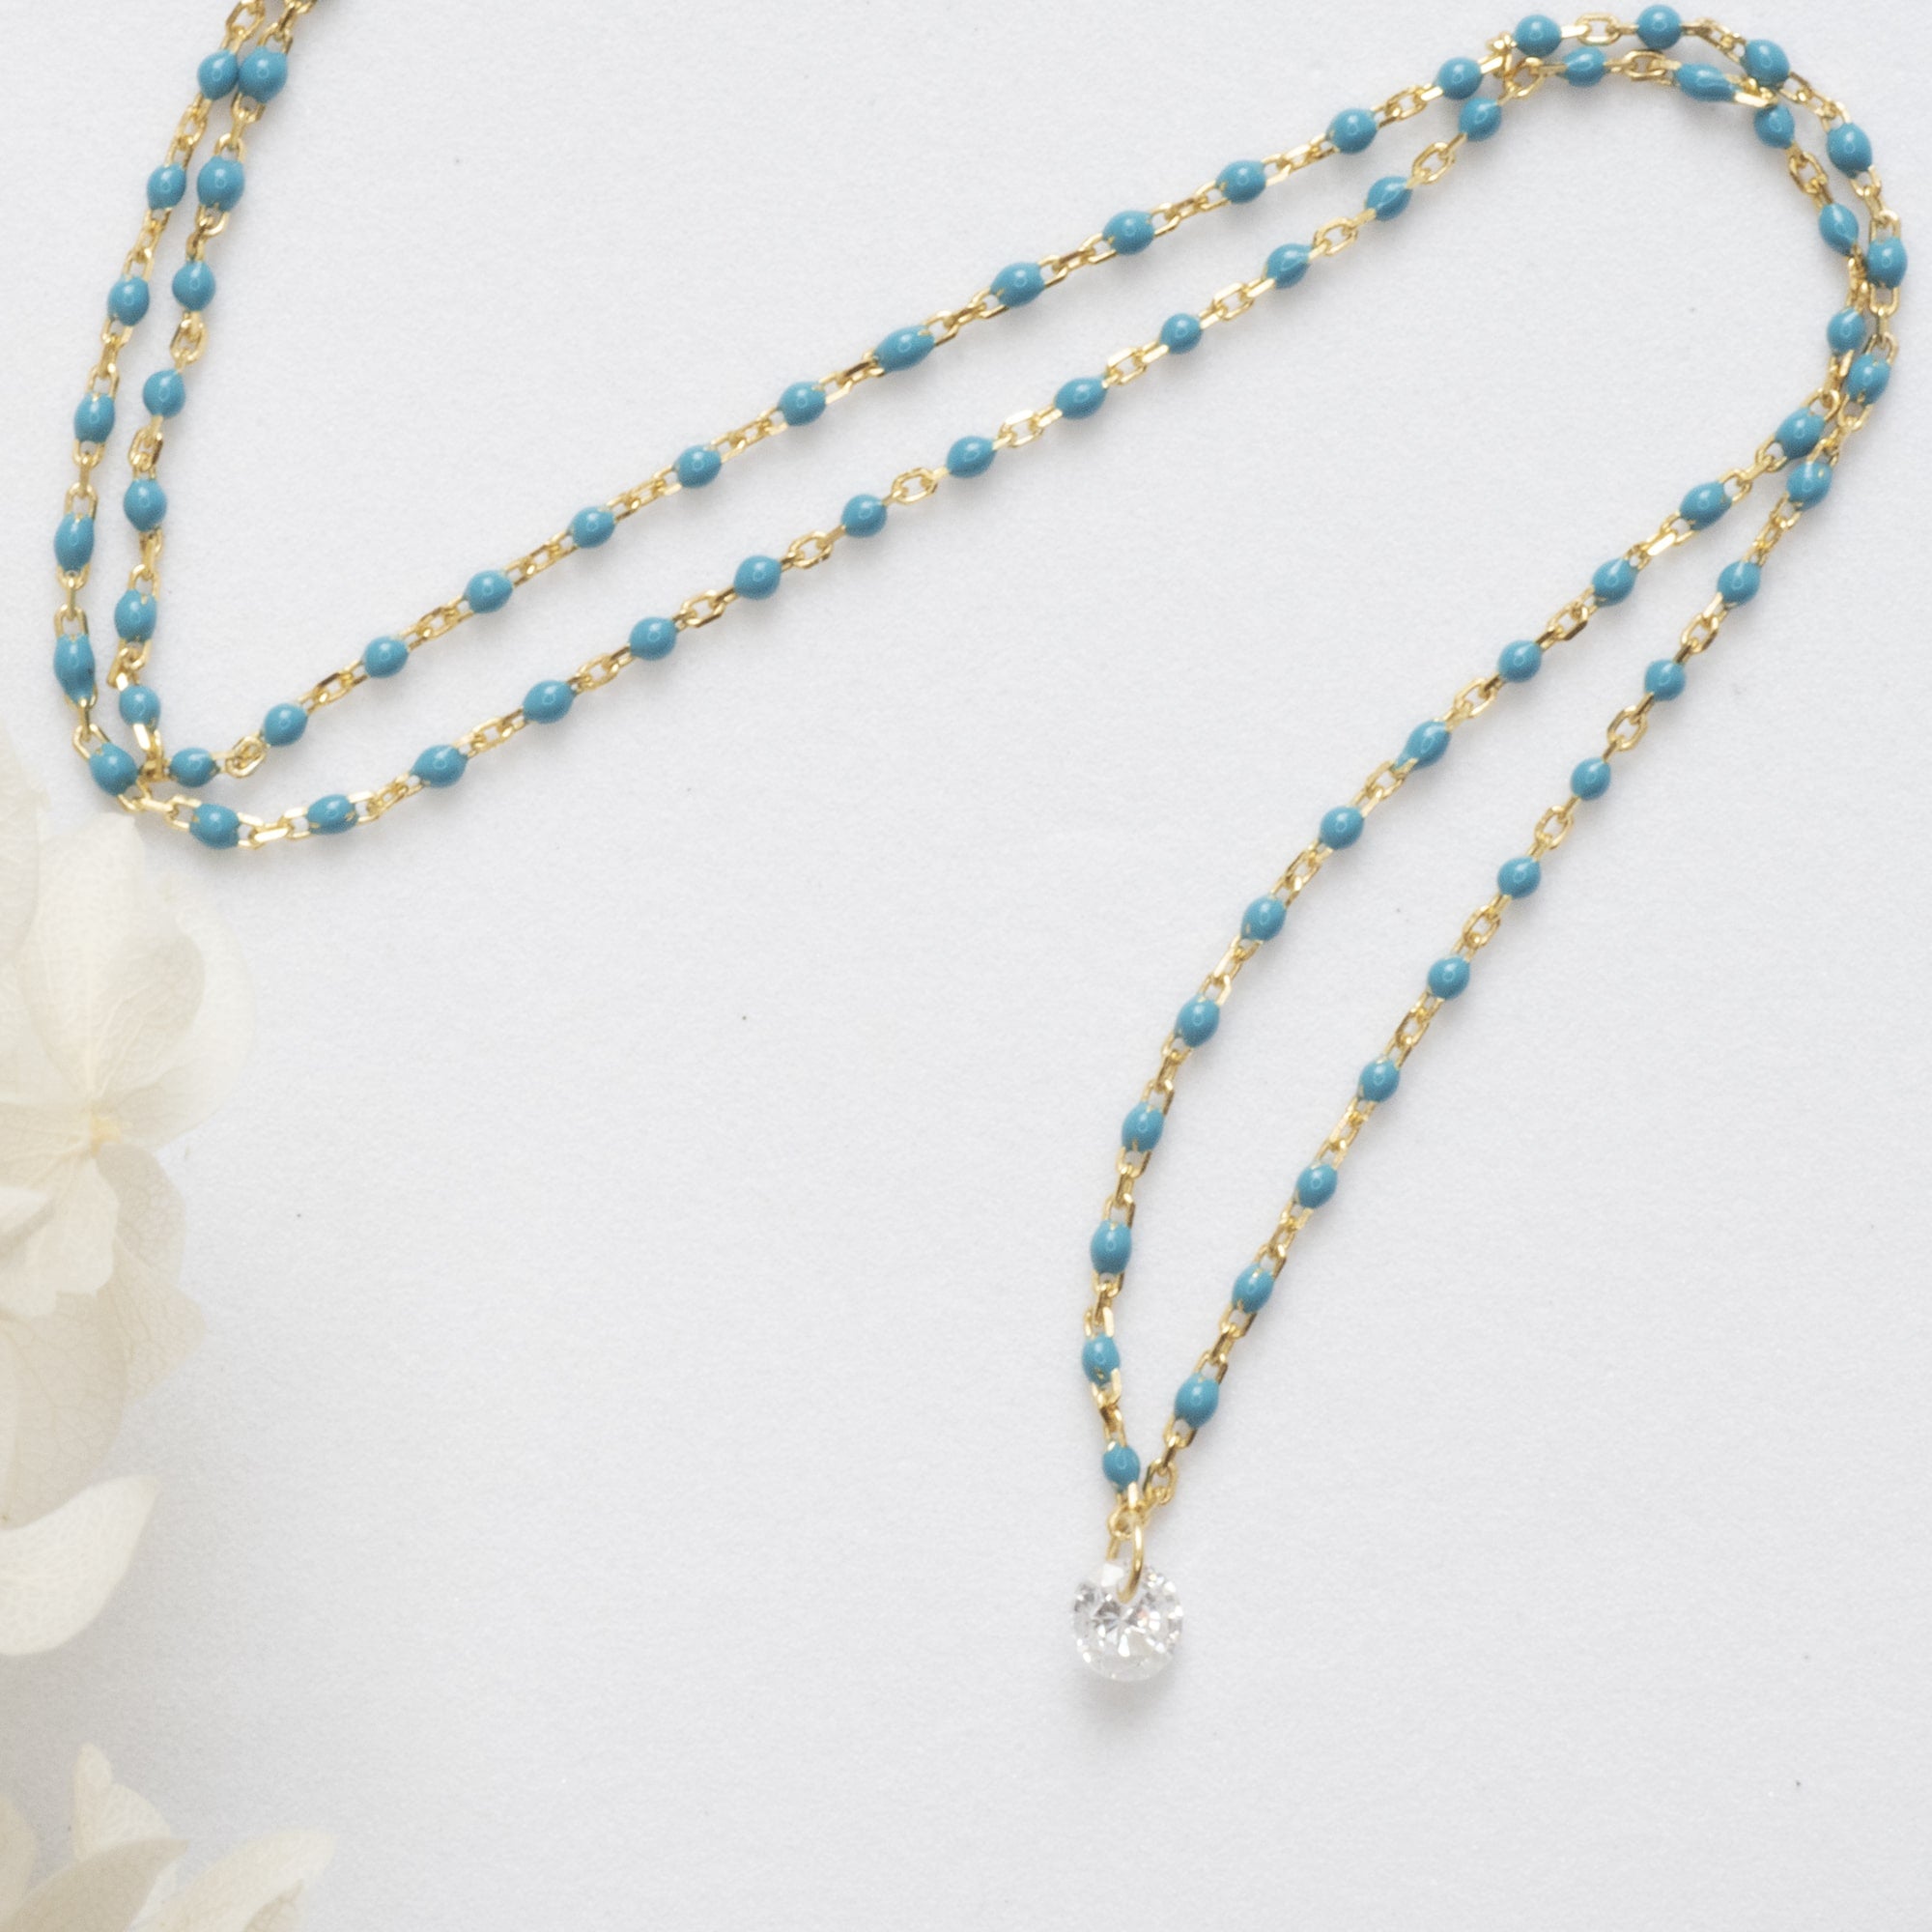 Cubic zirconia blue necklace